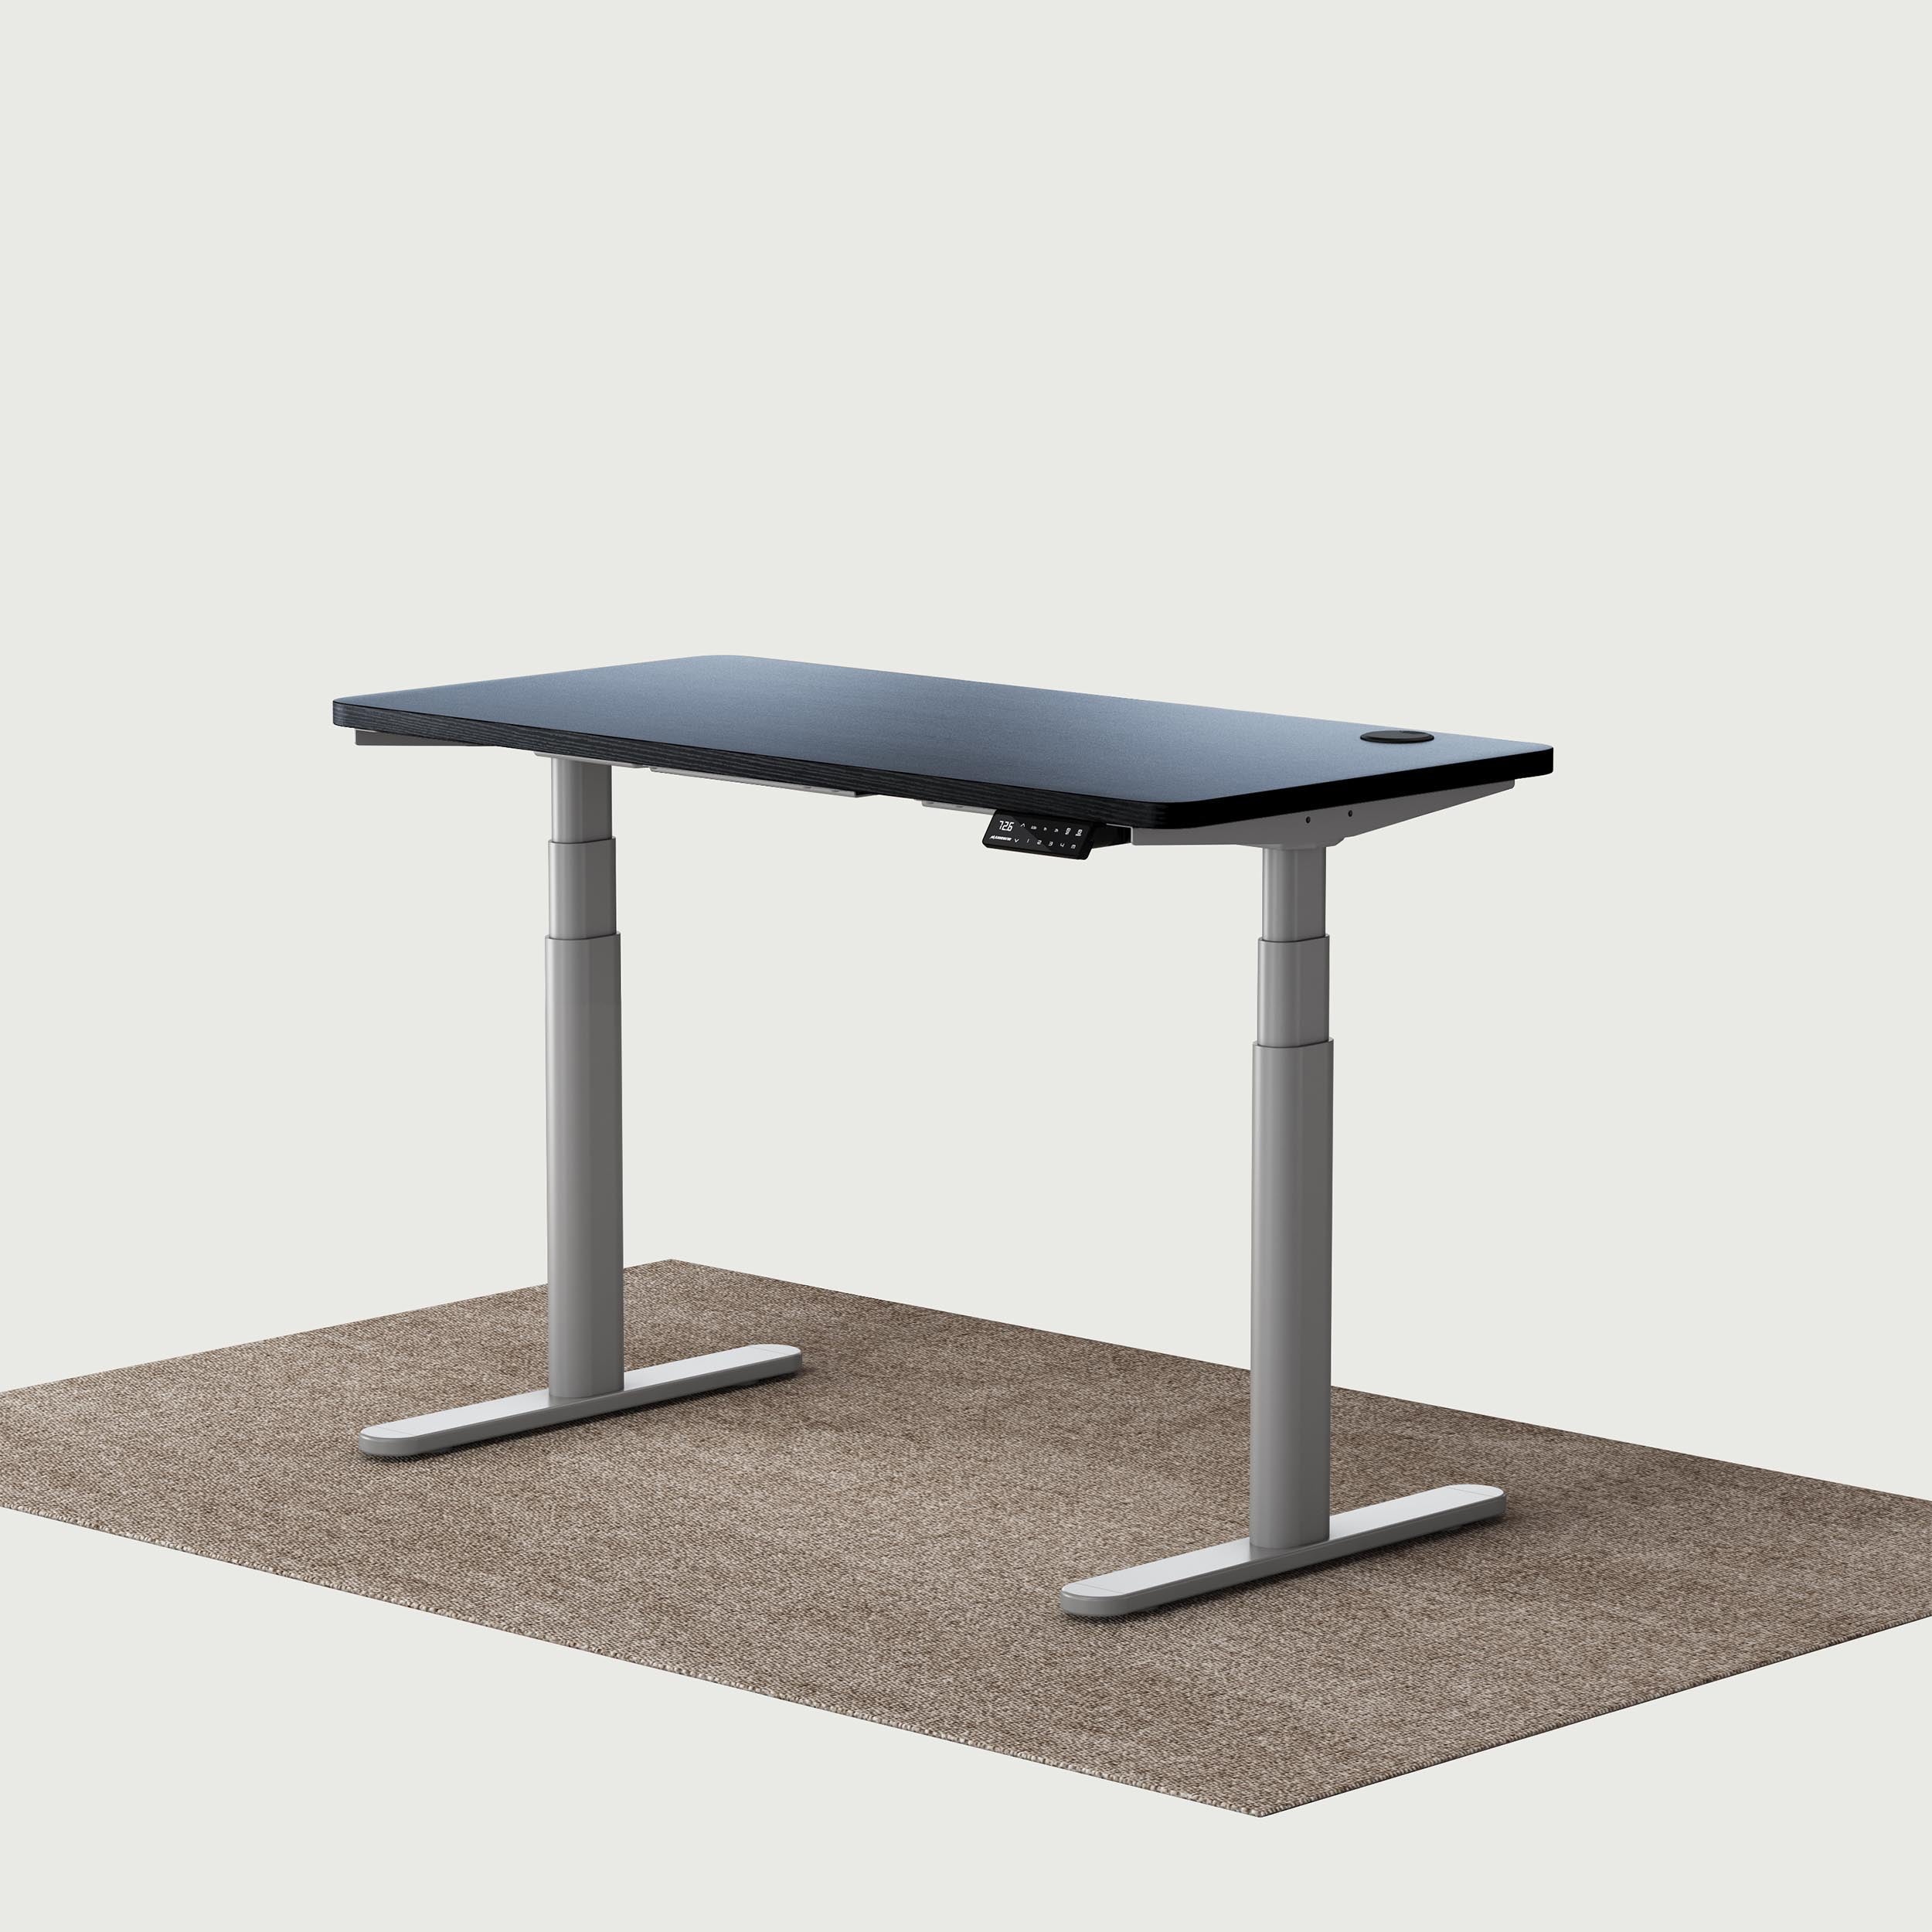 TH2 Pro Plus grey oval electric standing desk frame with black 120x60 cm desktop